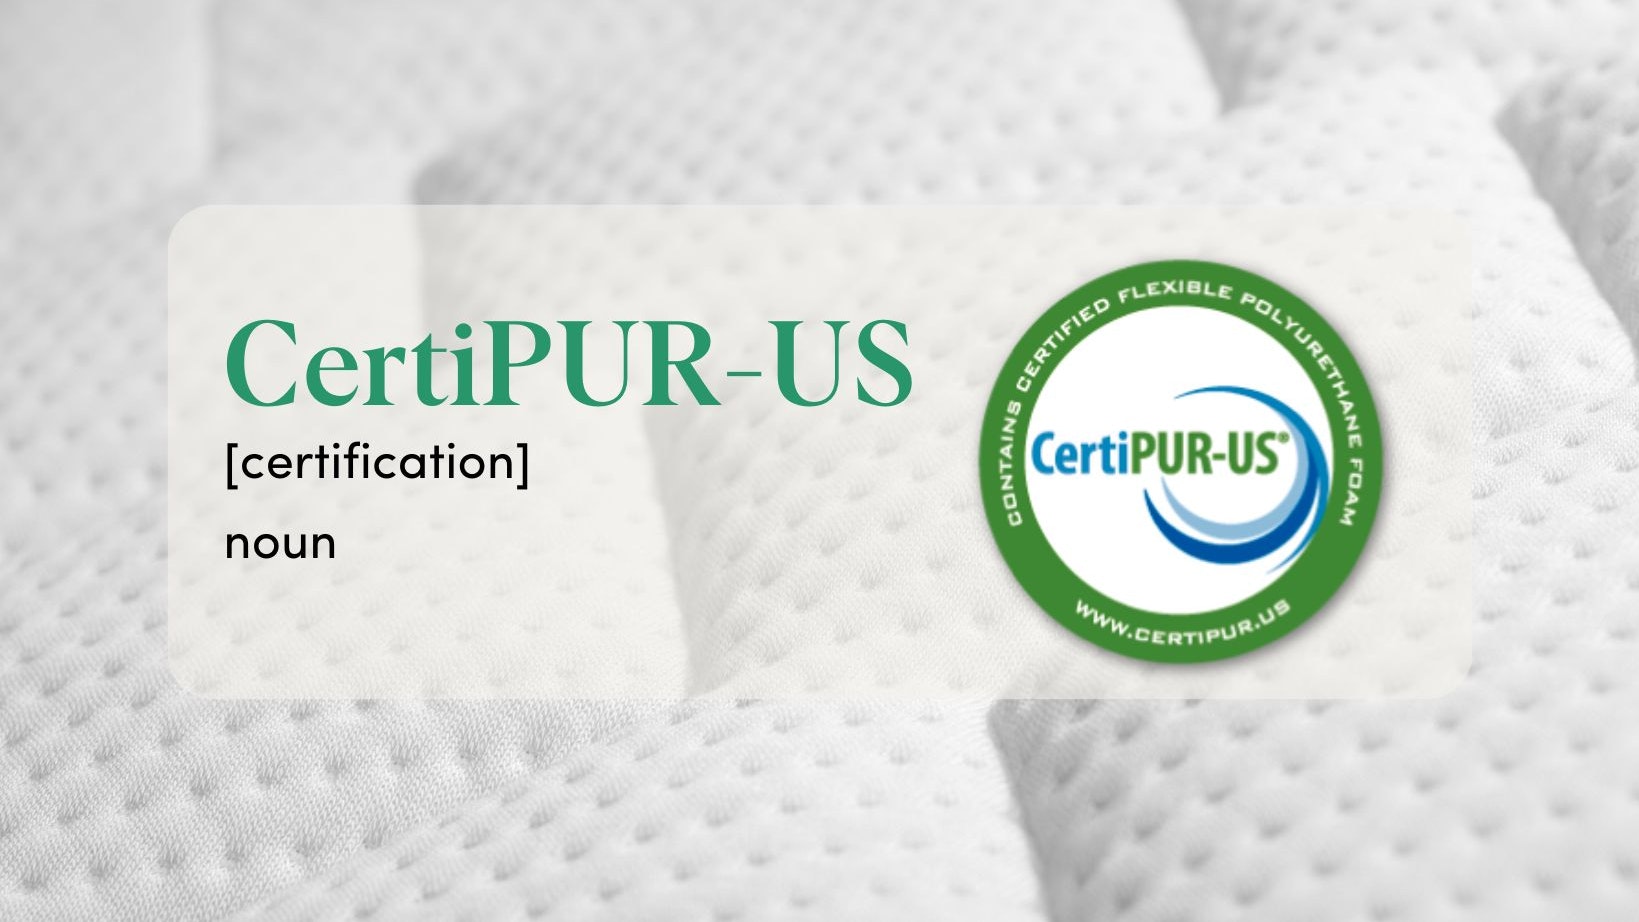 CeritPUR-US Certification